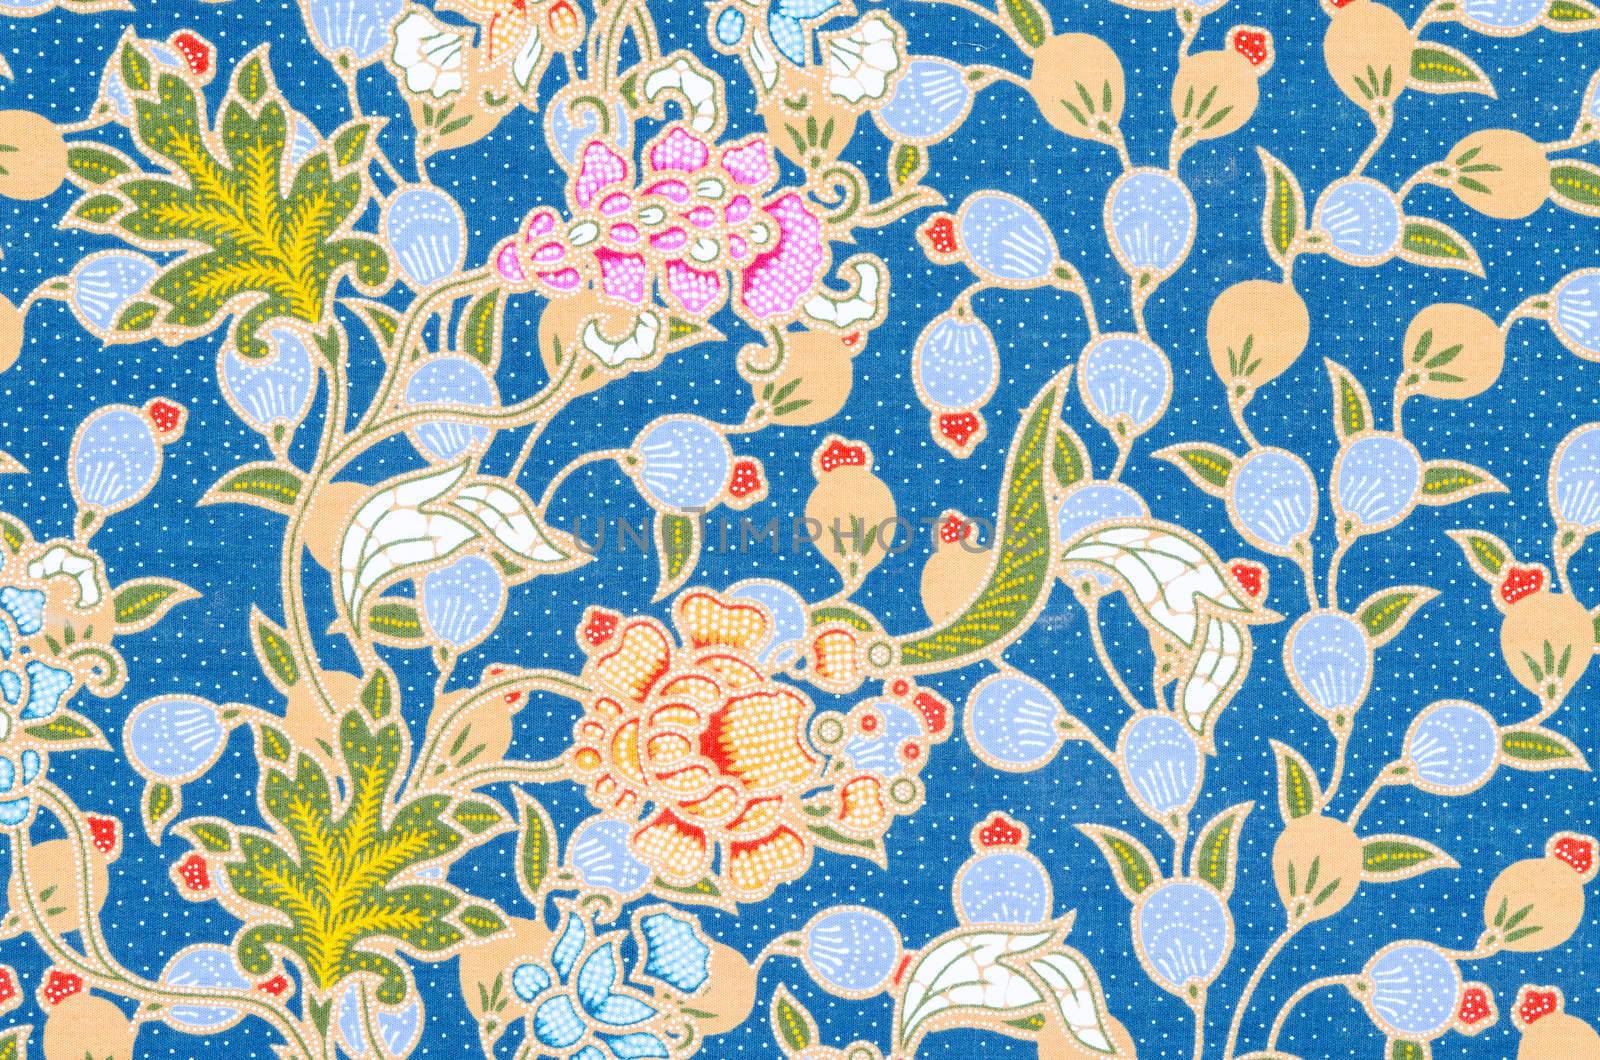 flower pattern background on batik fabric